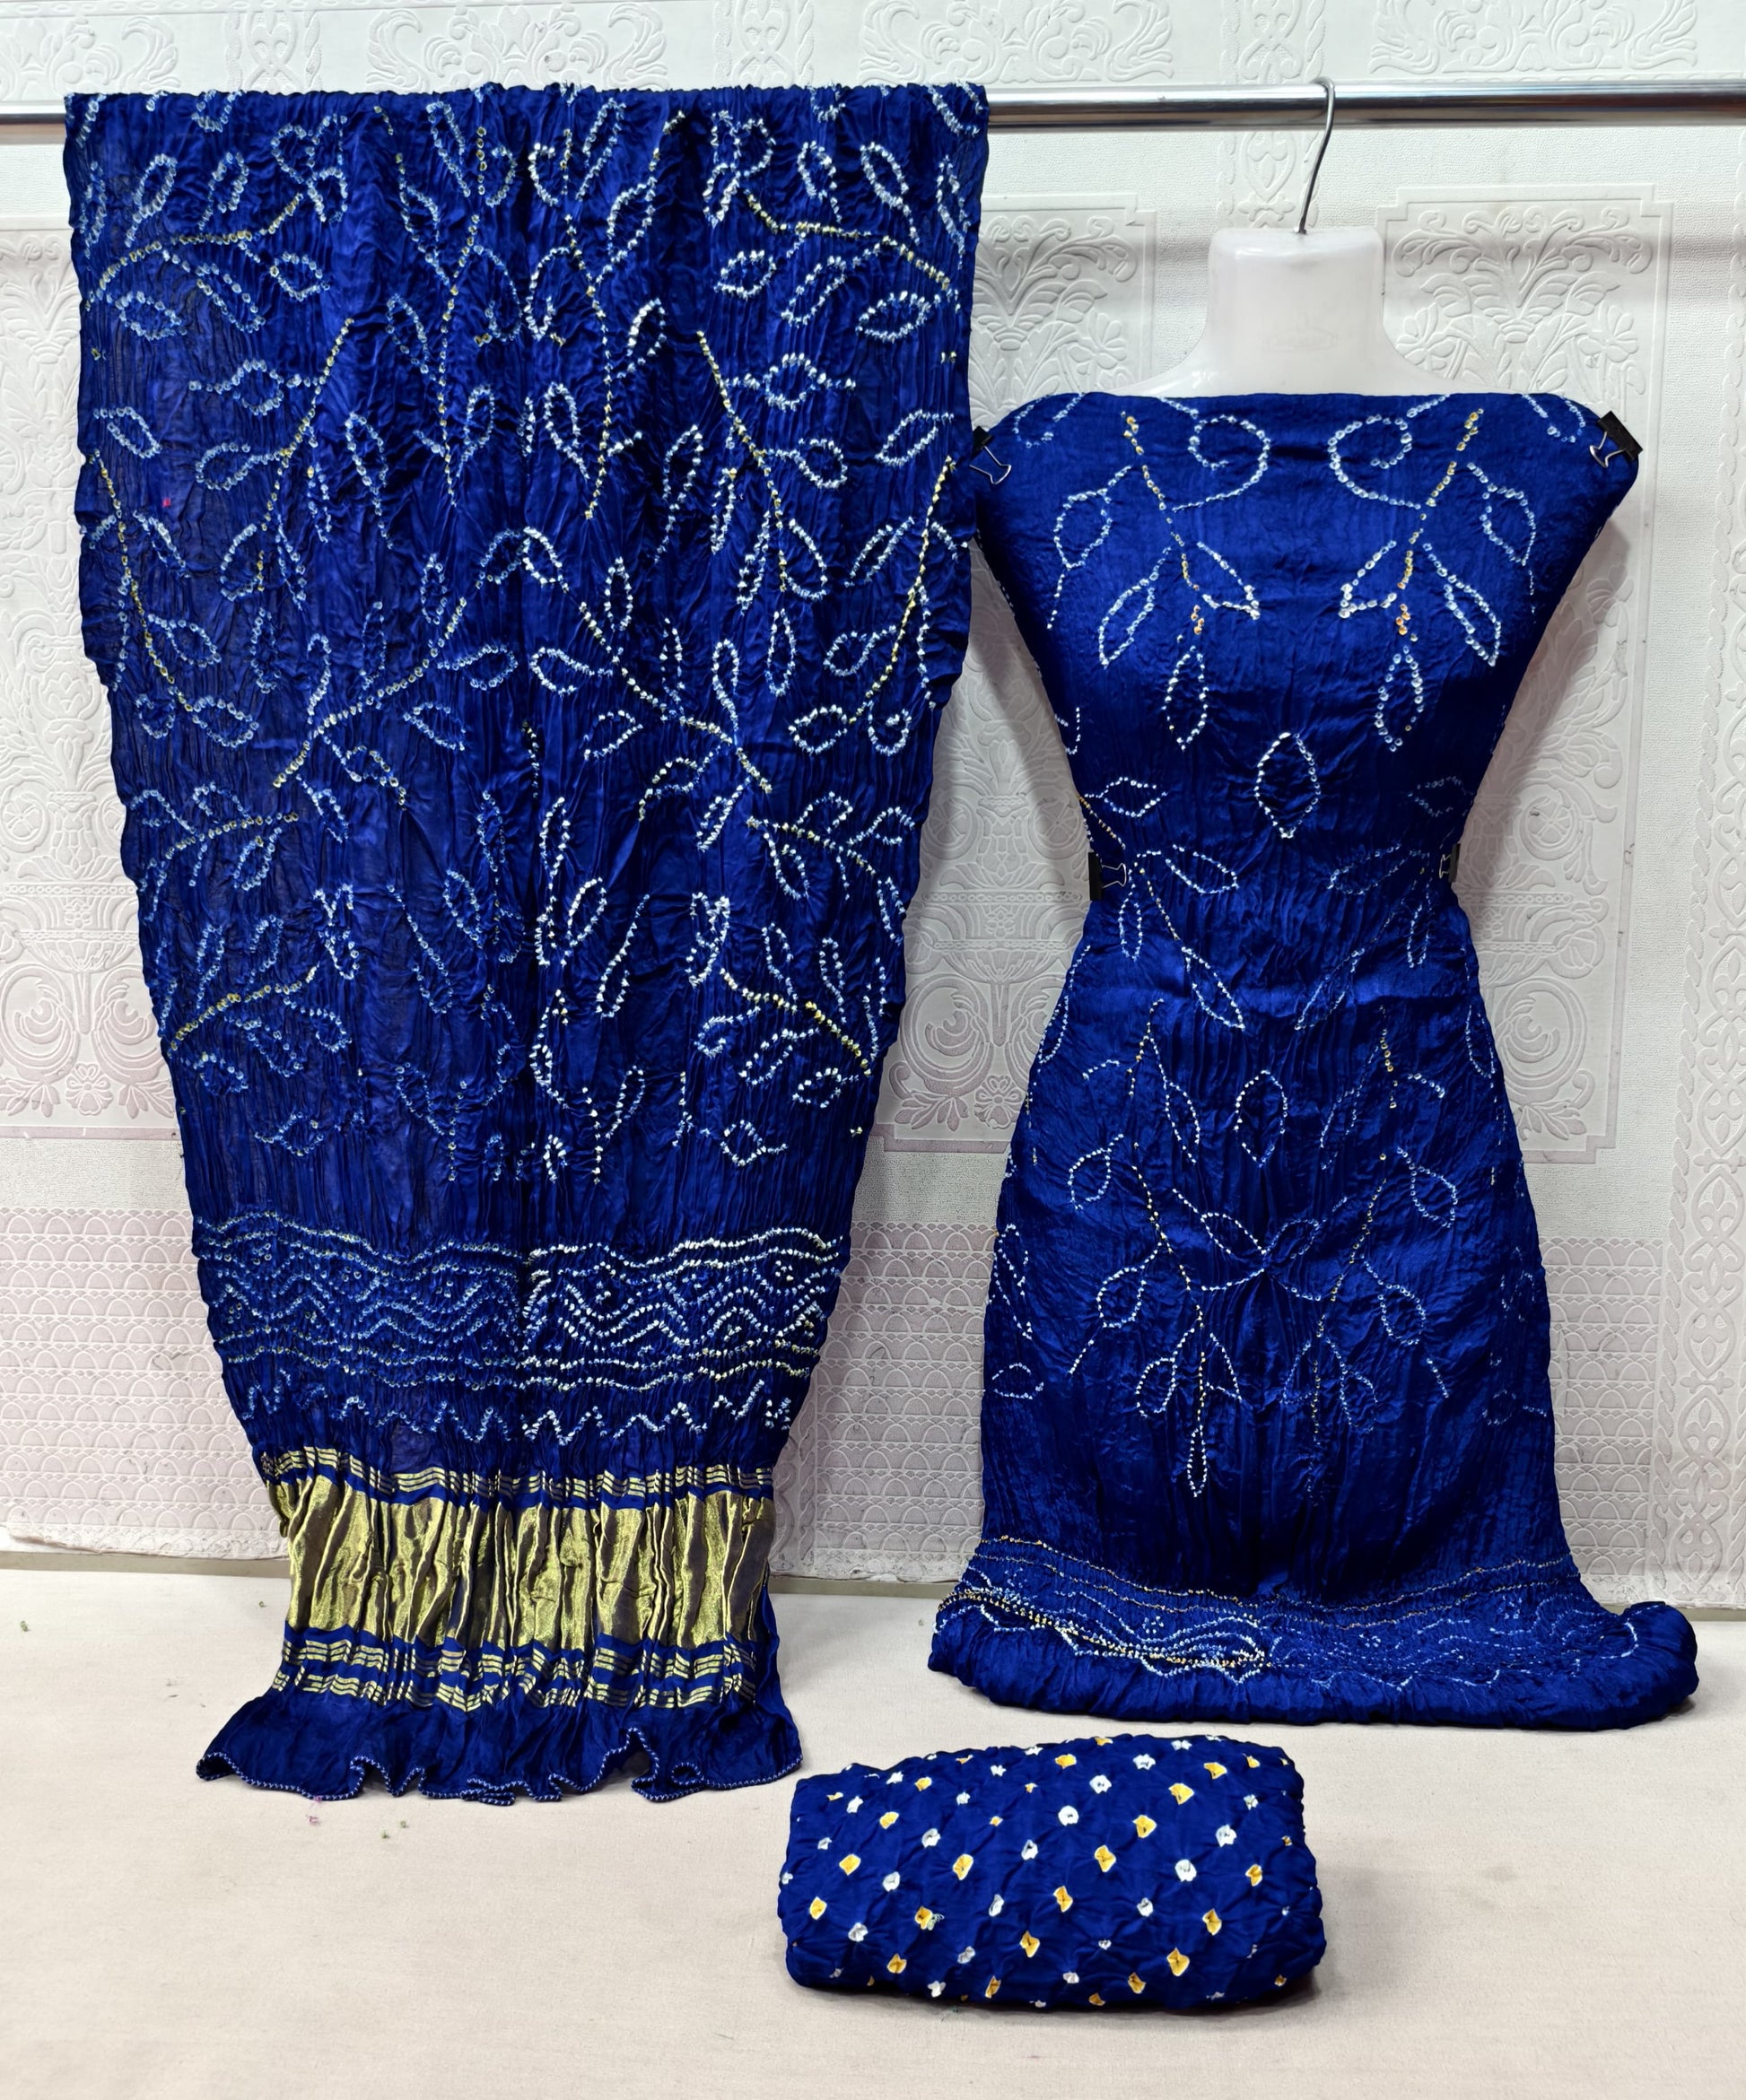 Modal Silk Barik Bandhej work Bandhani Dress Material - Premium  from Ethenika.com  - Just INR 5990! Shop now at Ethenika.com 